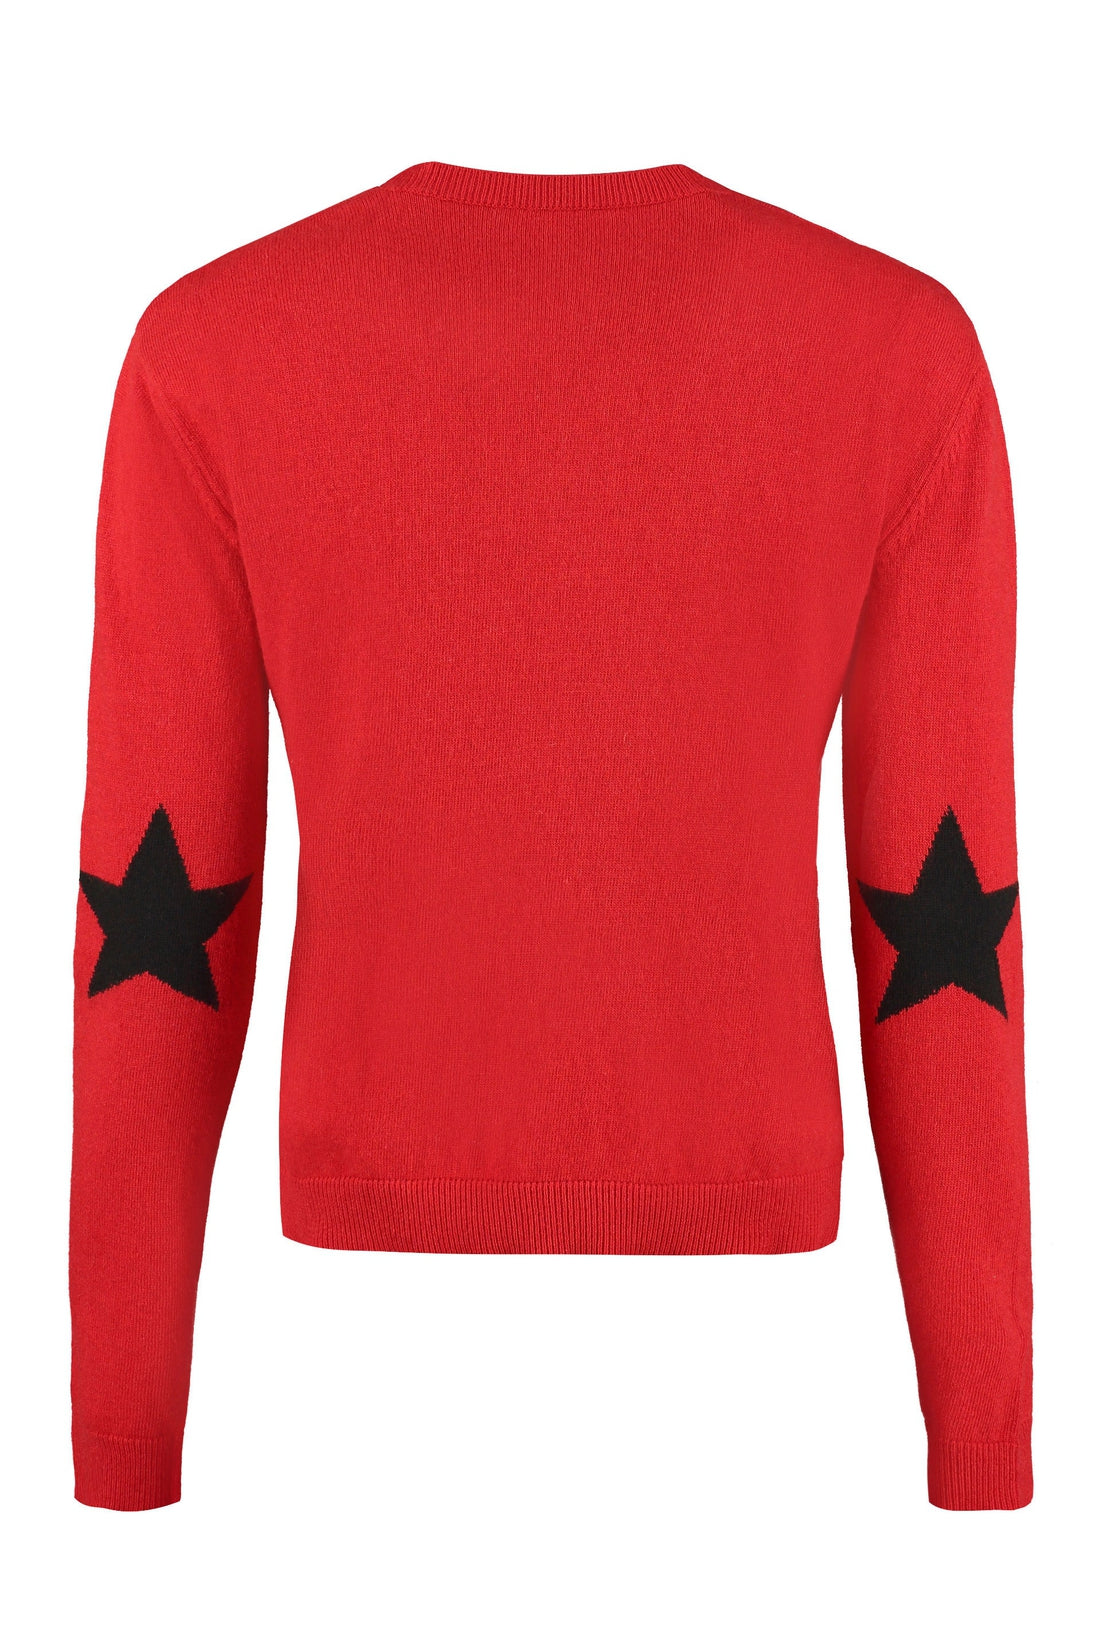 RED VALENTINO-OUTLET-SALE-Intarsia crew-neck sweater-ARCHIVIST